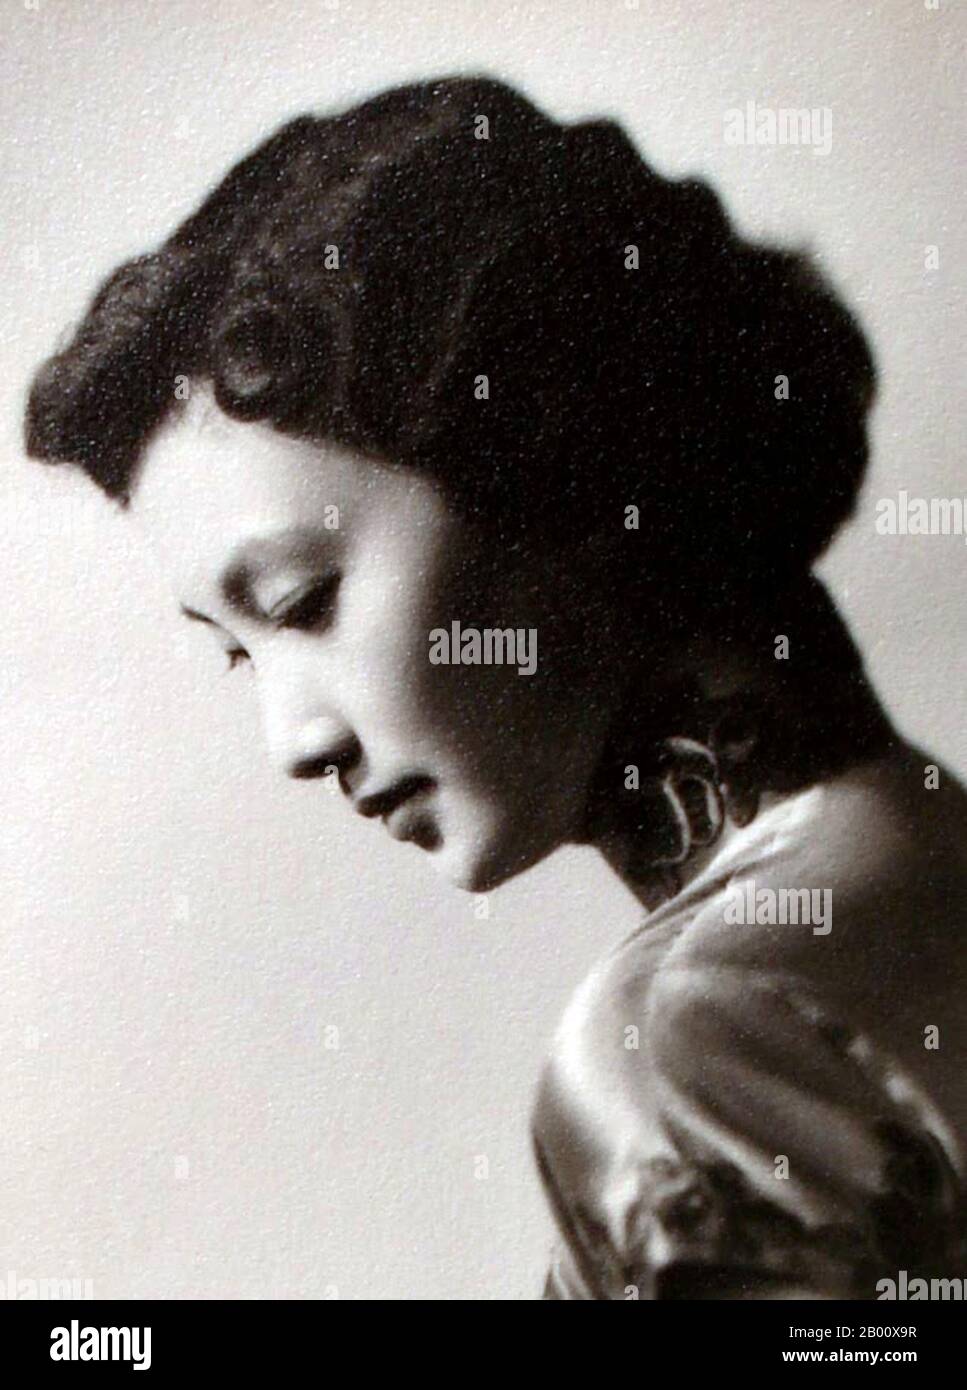 China: Xia Meng/Hsia Moon, 'Great Wall Crown Princess' of the Hong Kong movie industry, in the 1950s.  Xia Meng, aka Hsia Moon or Miranda Yang; born Yang Meng, on 16 February 1932 in Shanghai, China) is a Hong Kong actress and film producer. She was the key figure of Hong Kong's Left Wing Mandarin movie scene. Stock Photo